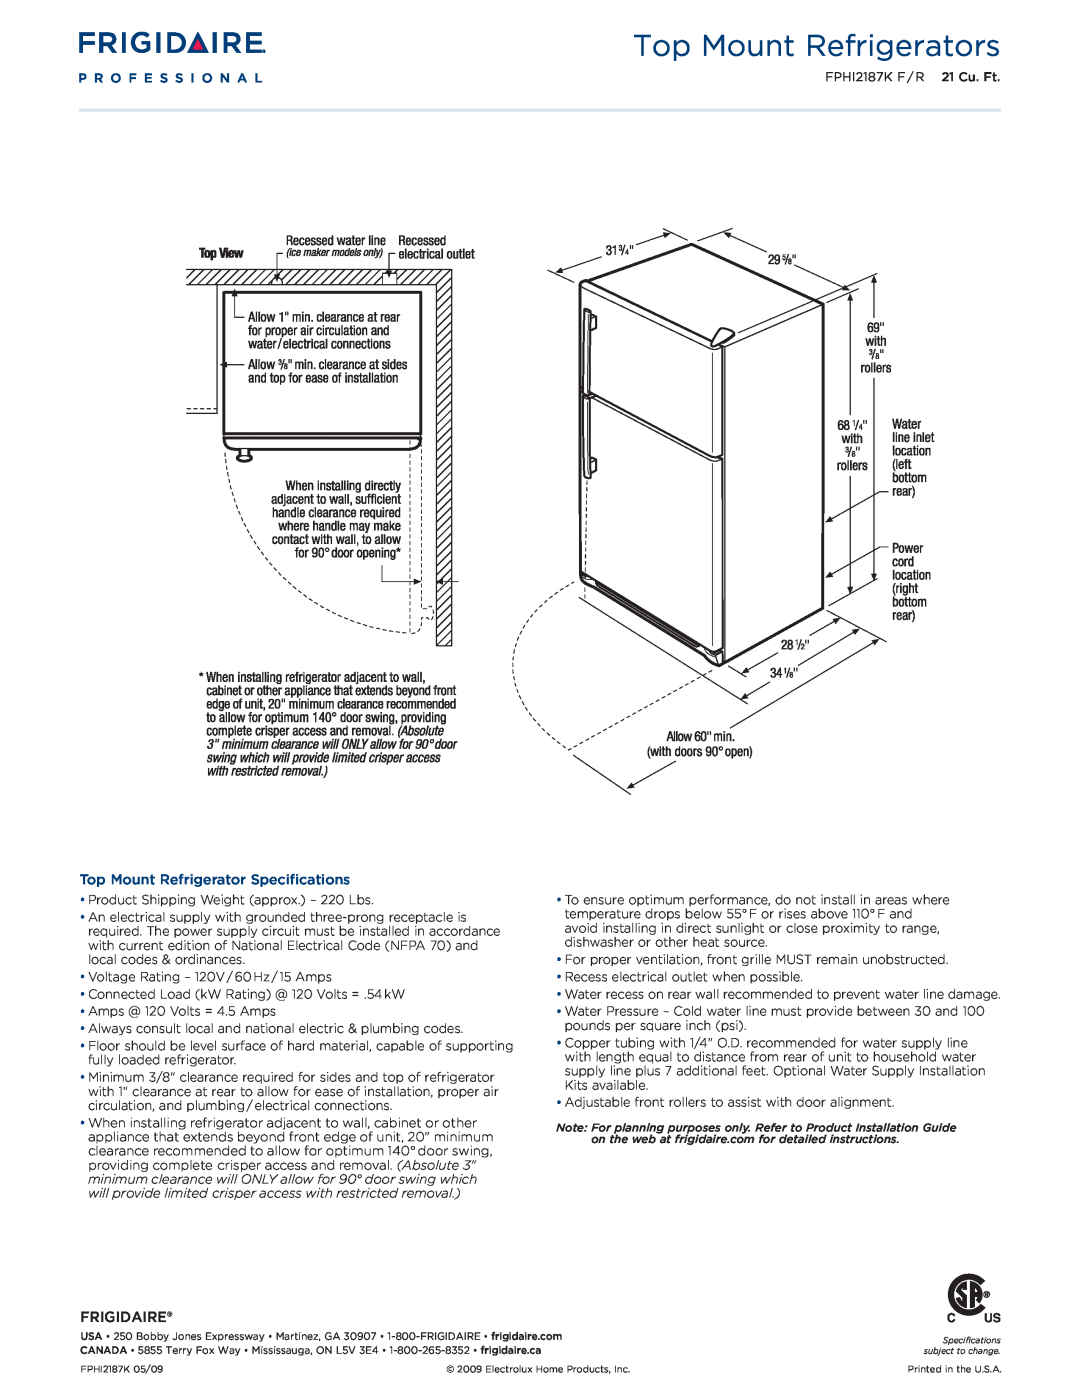 Frigidaire FPHI2187k F/R* dimensions Top Mount Refrigerator Specifications, Frigidaire, Top Mount Refrigerators 